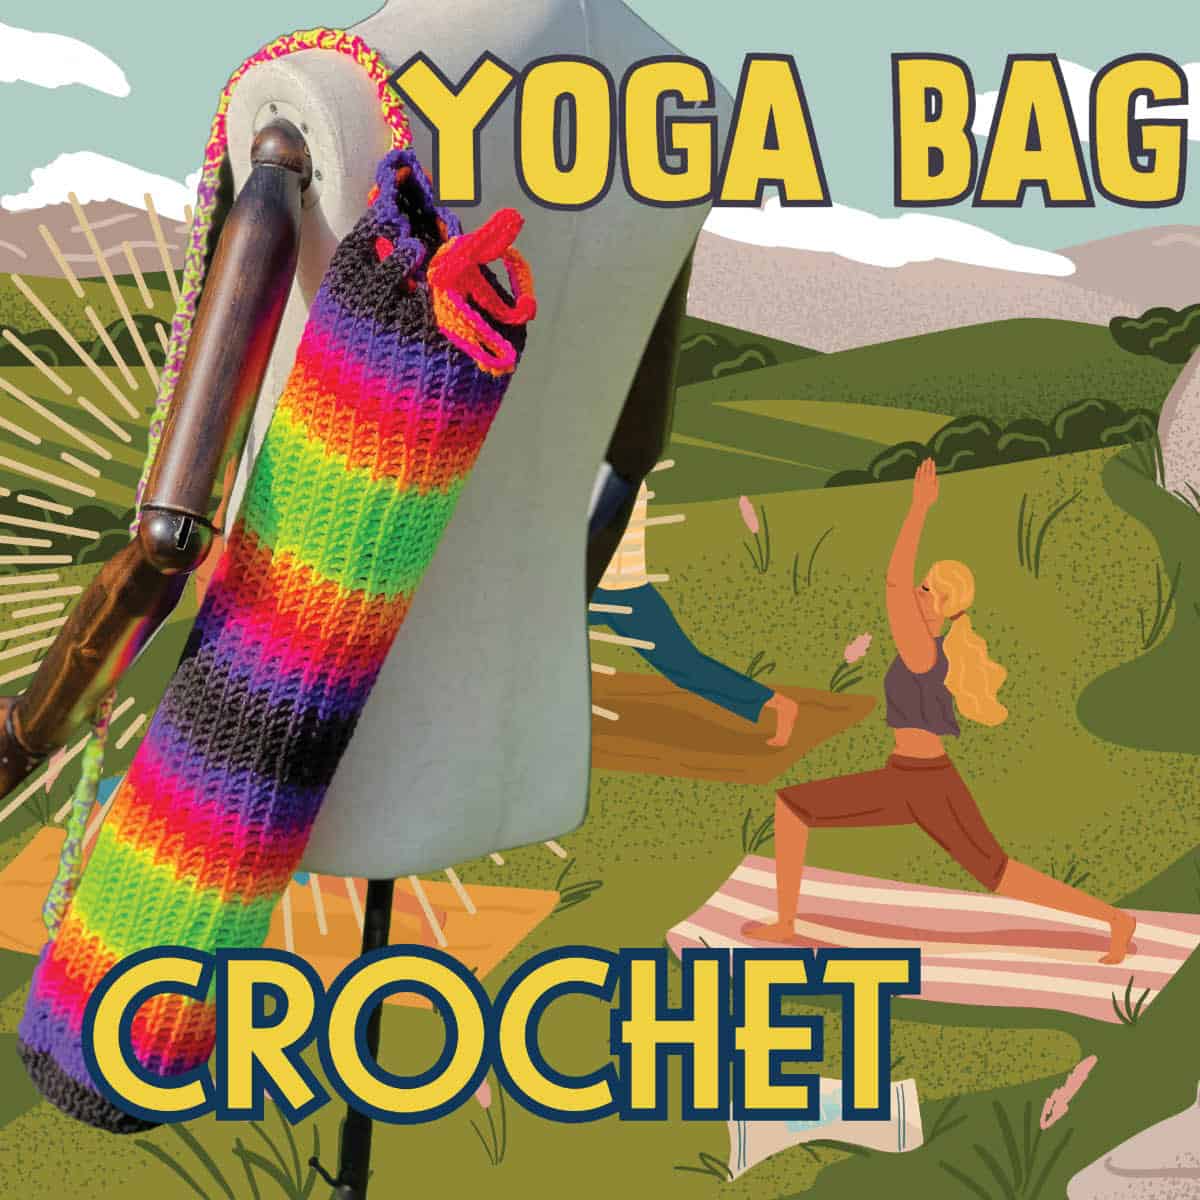 Crochet Yoga Bag Pattern by Mikey